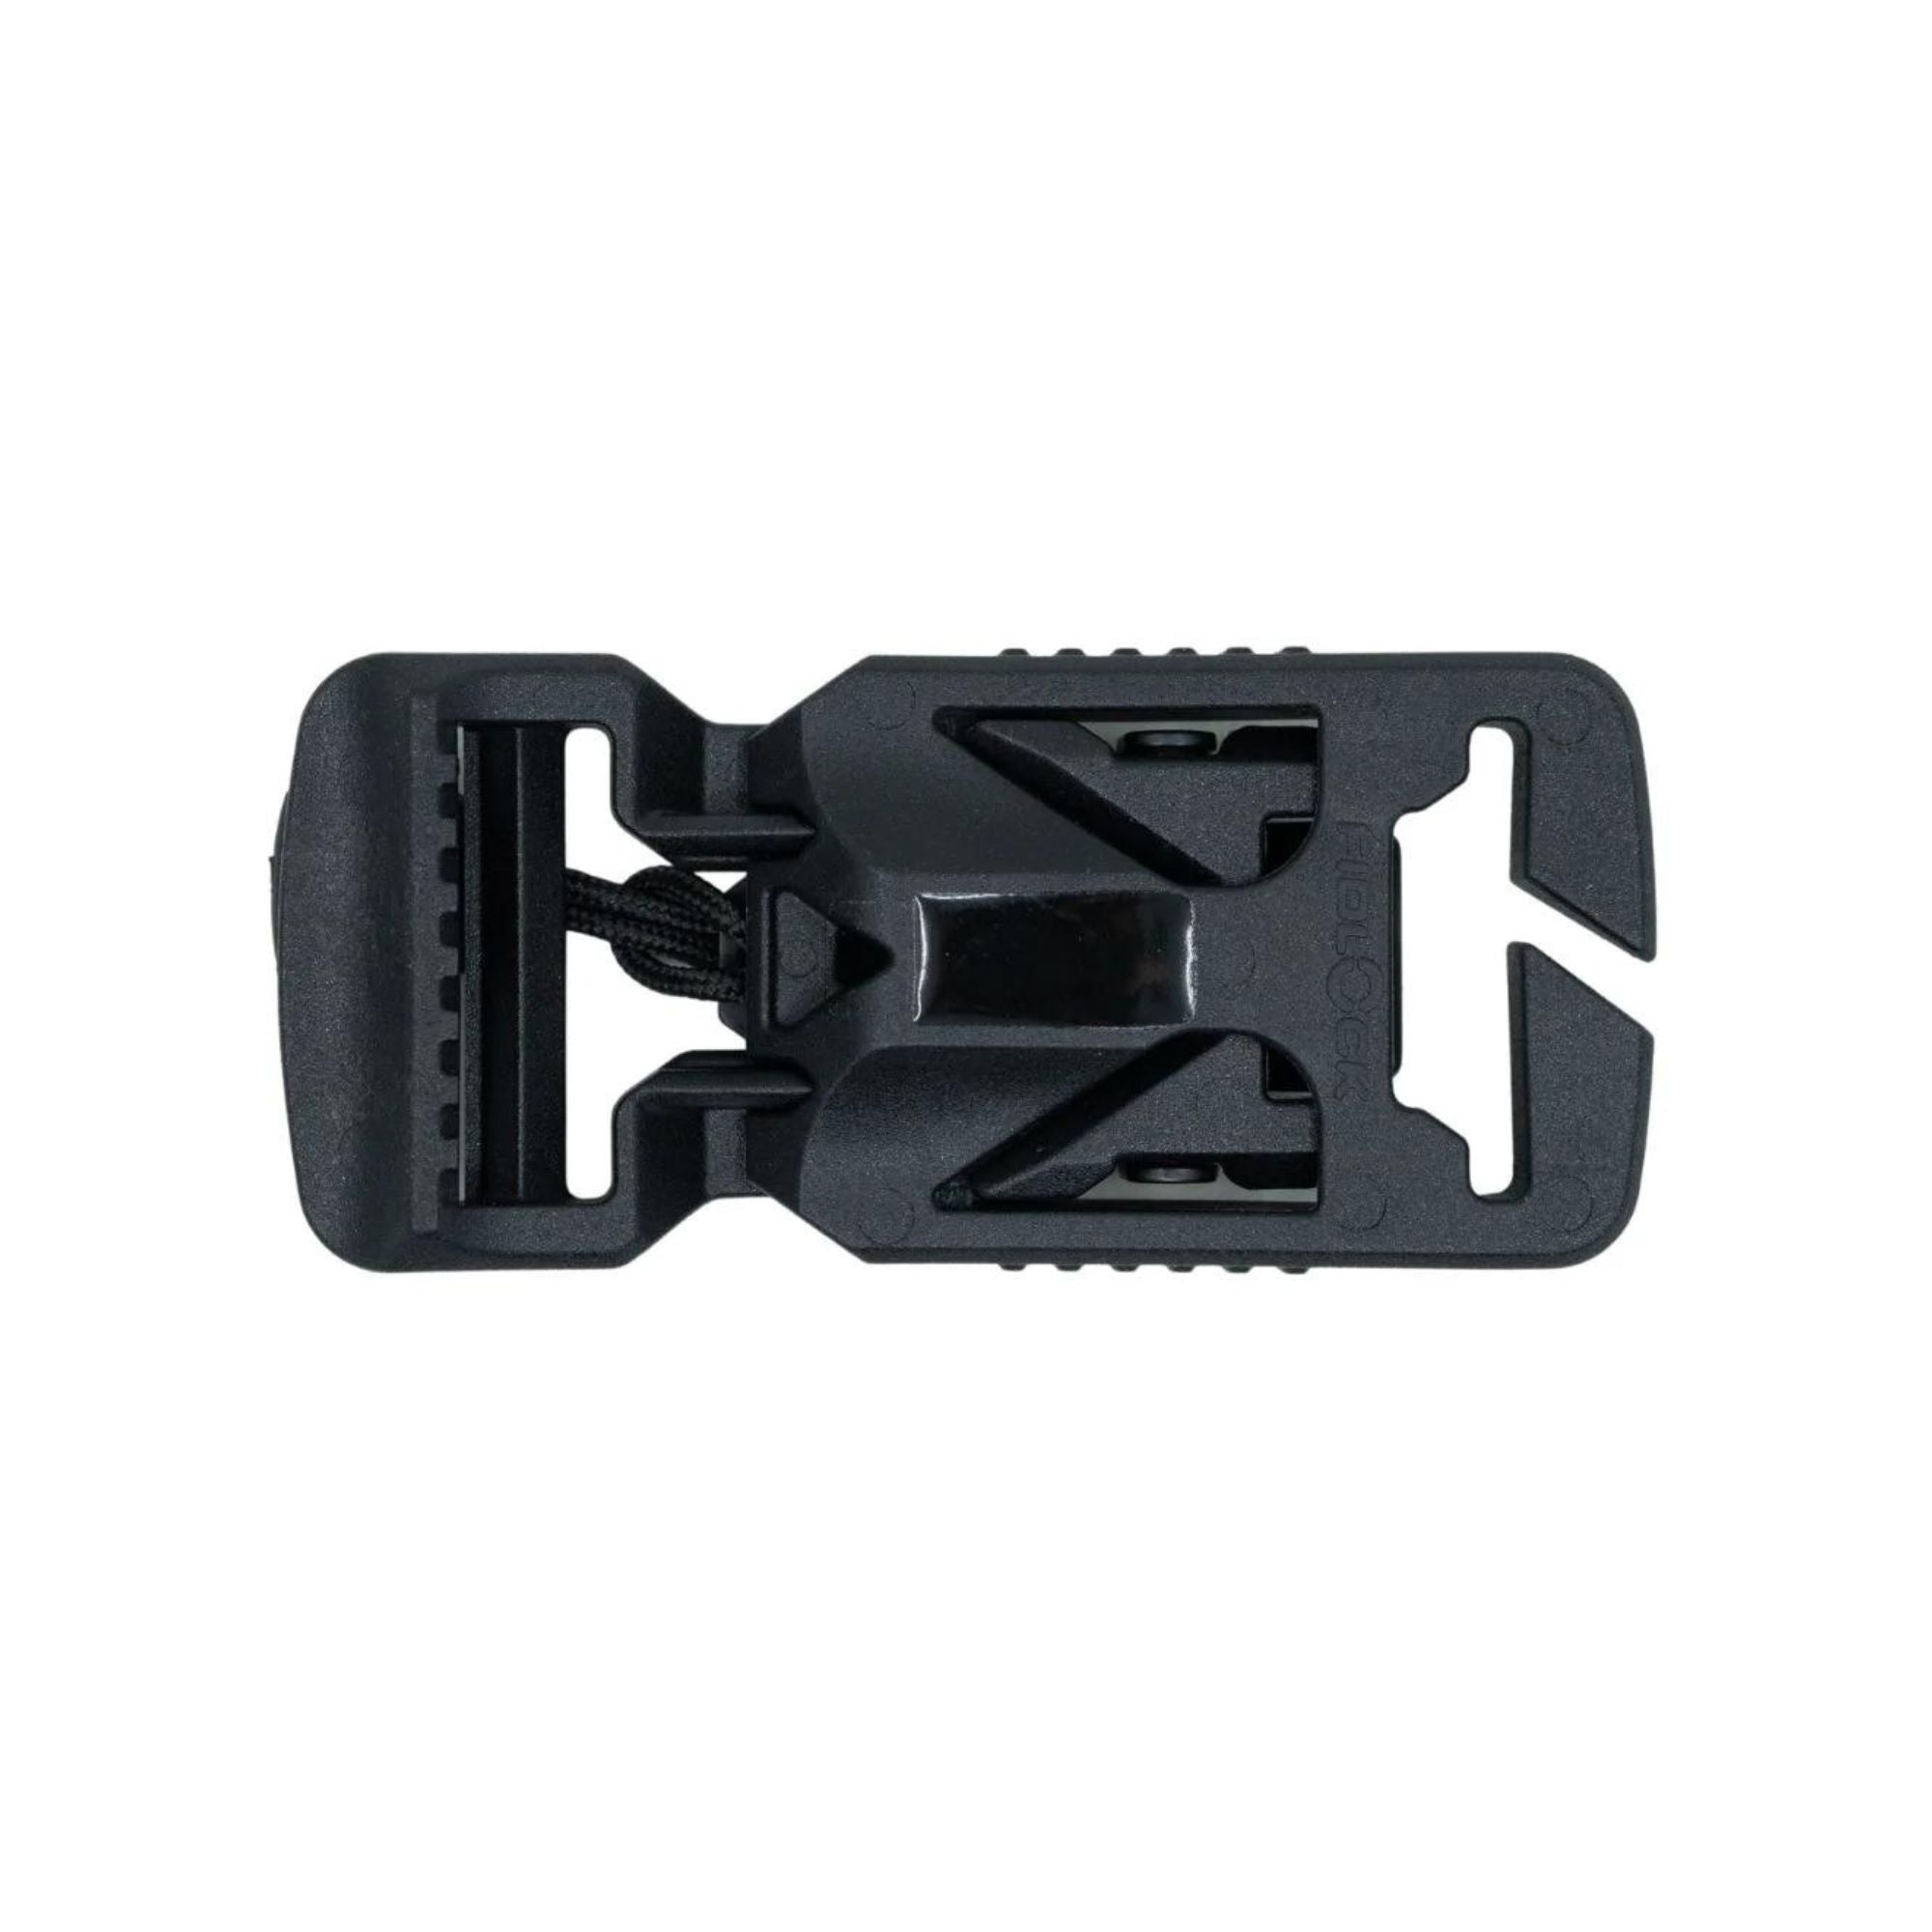 Fidlock® 1 inch Magnetic V-Buckle